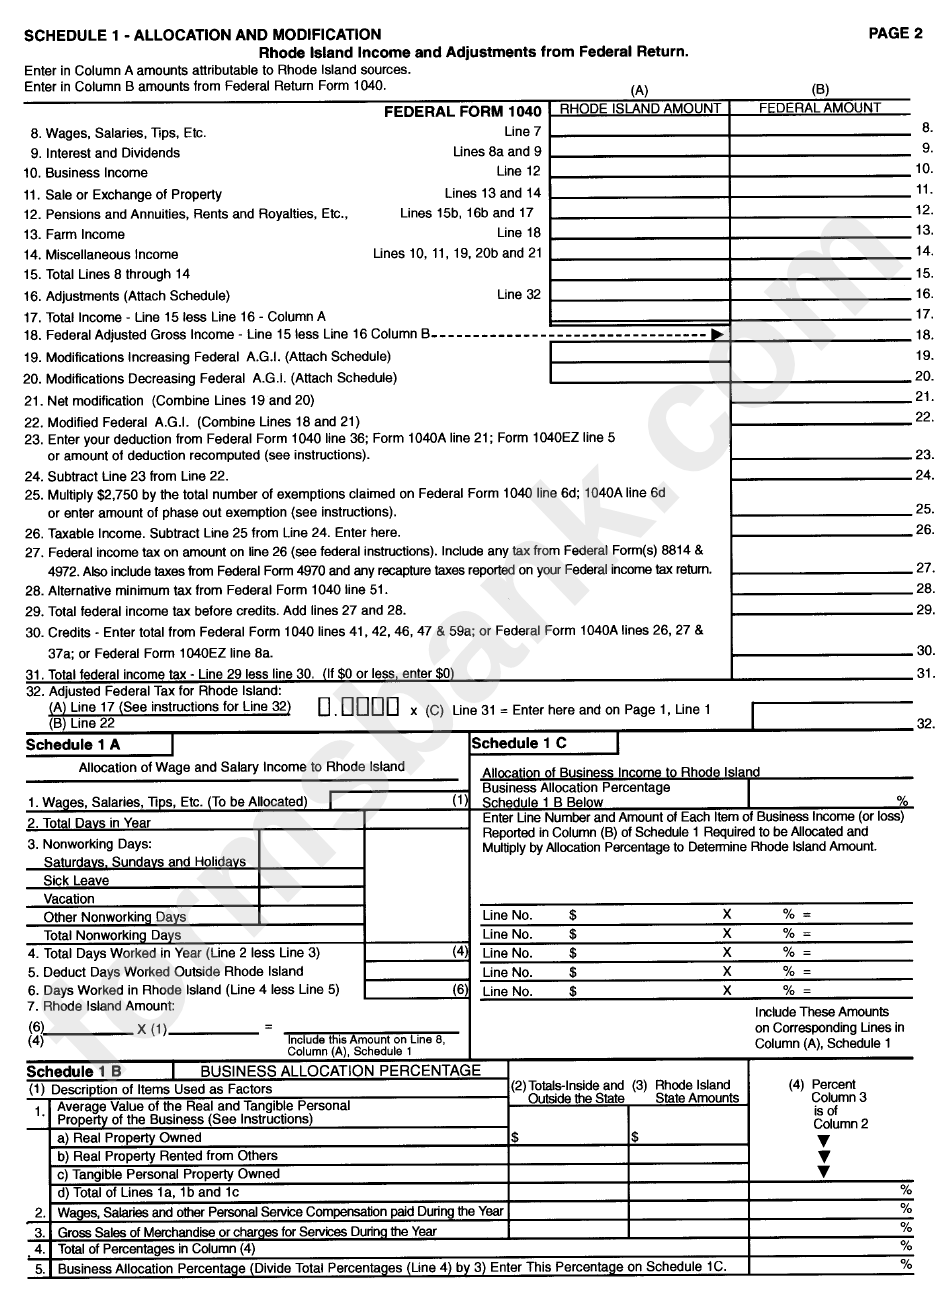 Form Ri-1040 Nr - Rhode Isalnd Nonresident Individual Income Tax Return - 1999